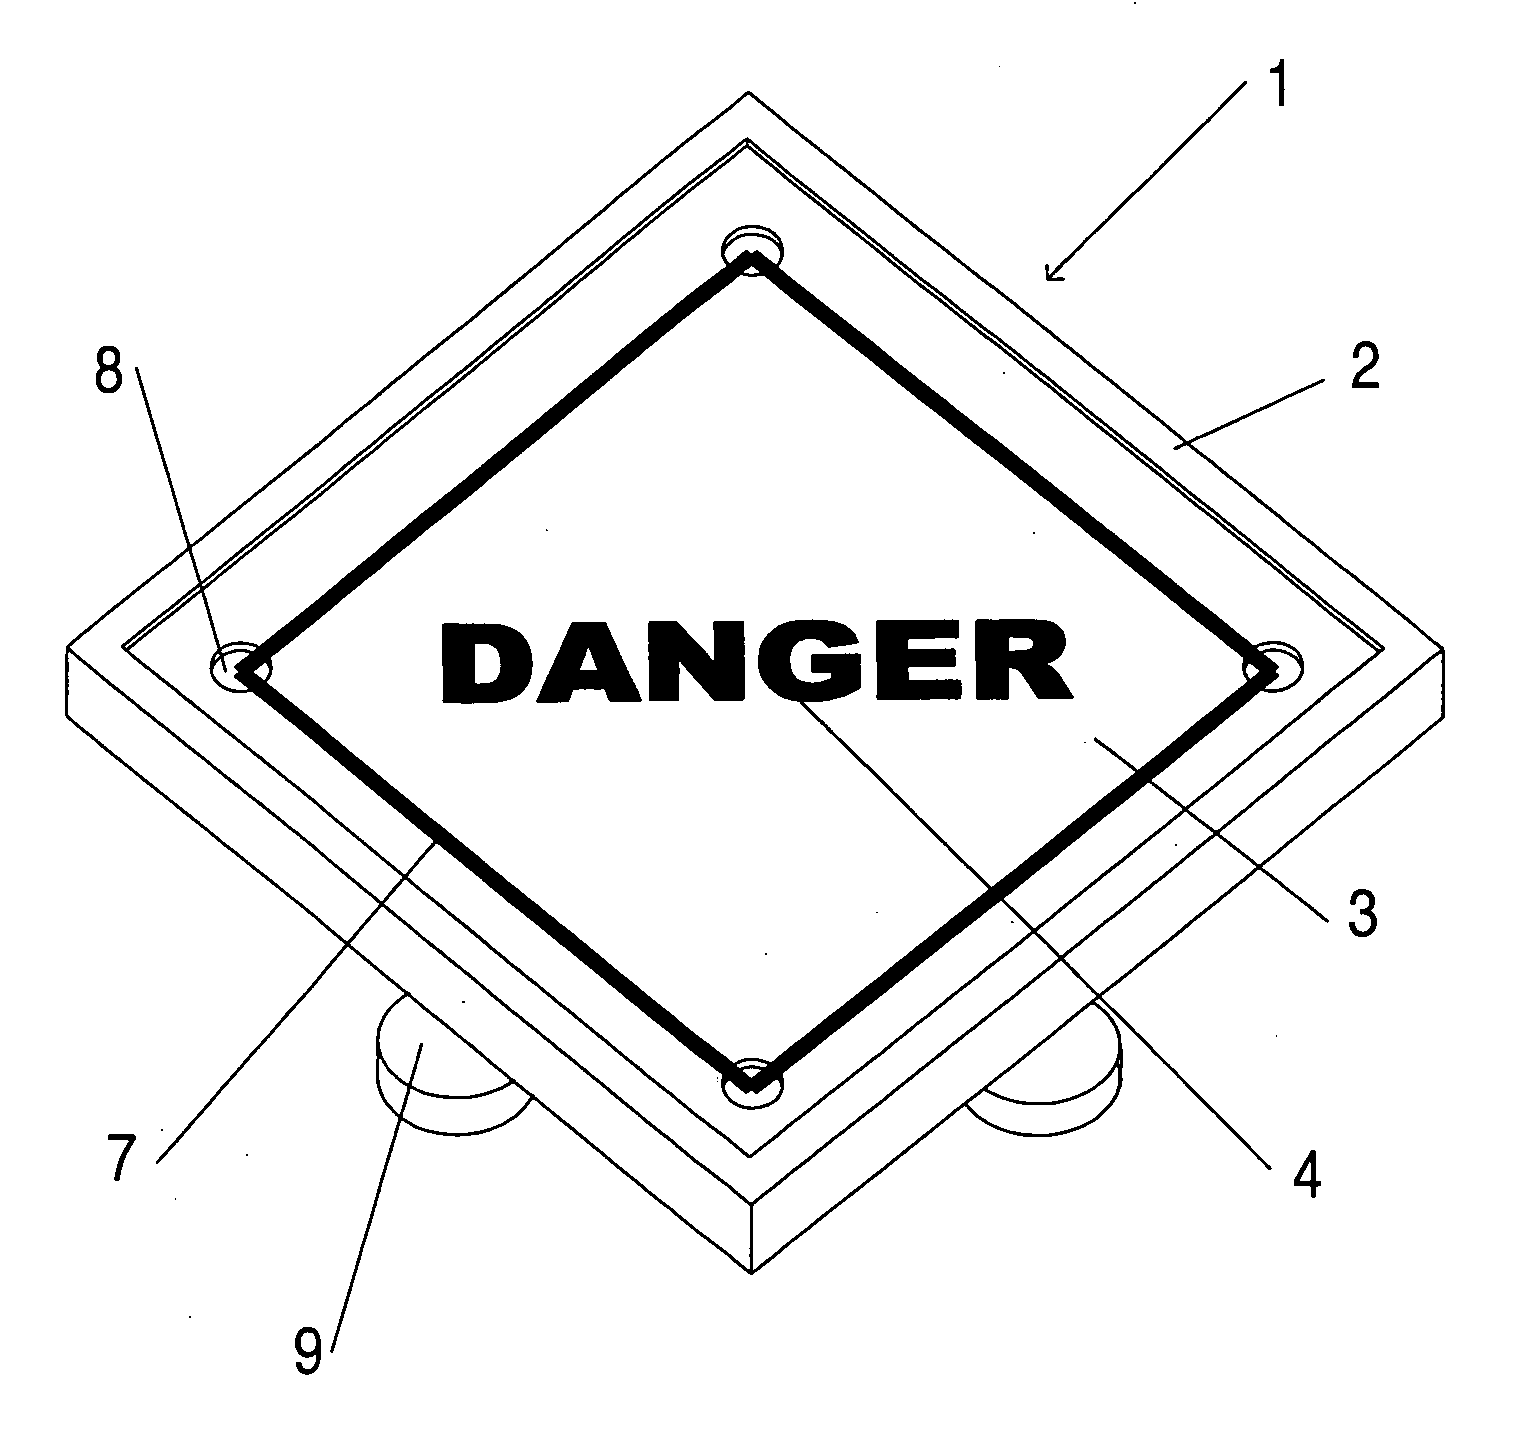 Marine warning sign